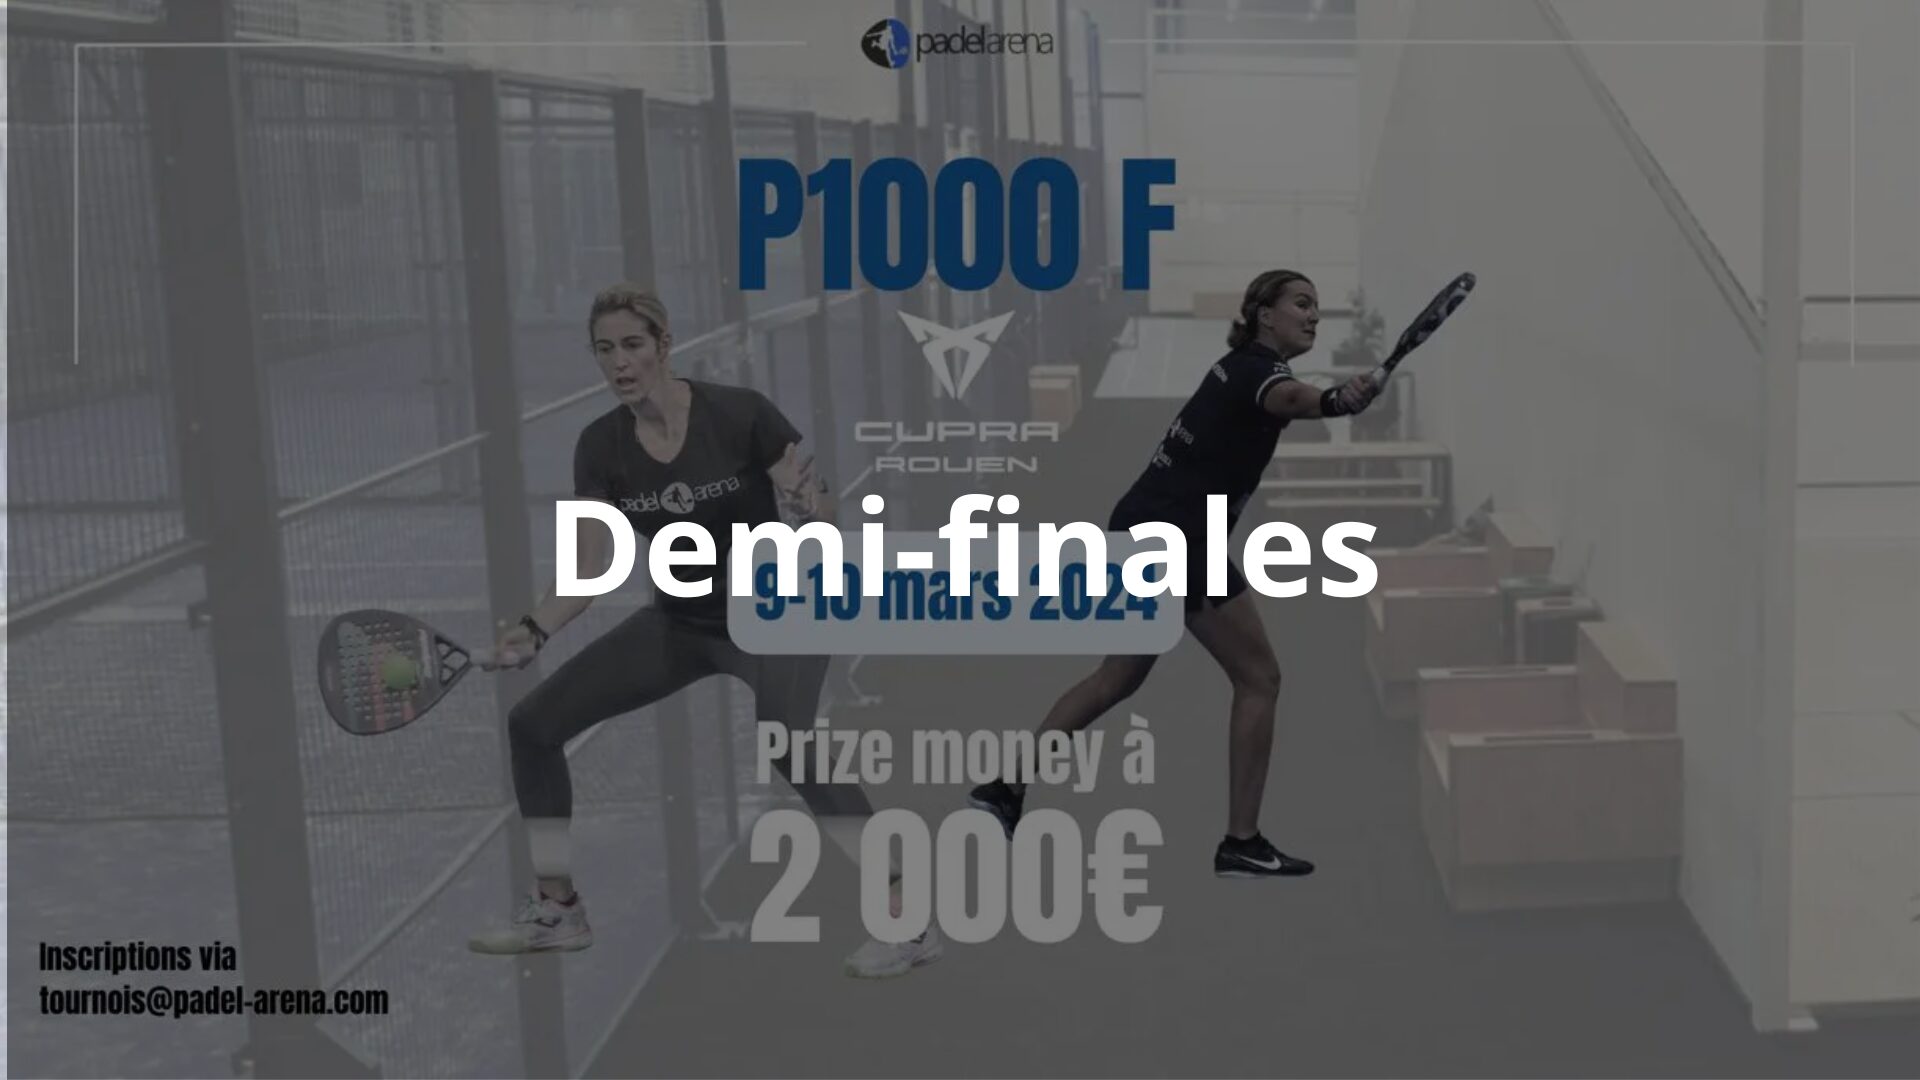 P1000 Padel Arena Cupra Rouen – Start av semifinalerna live!